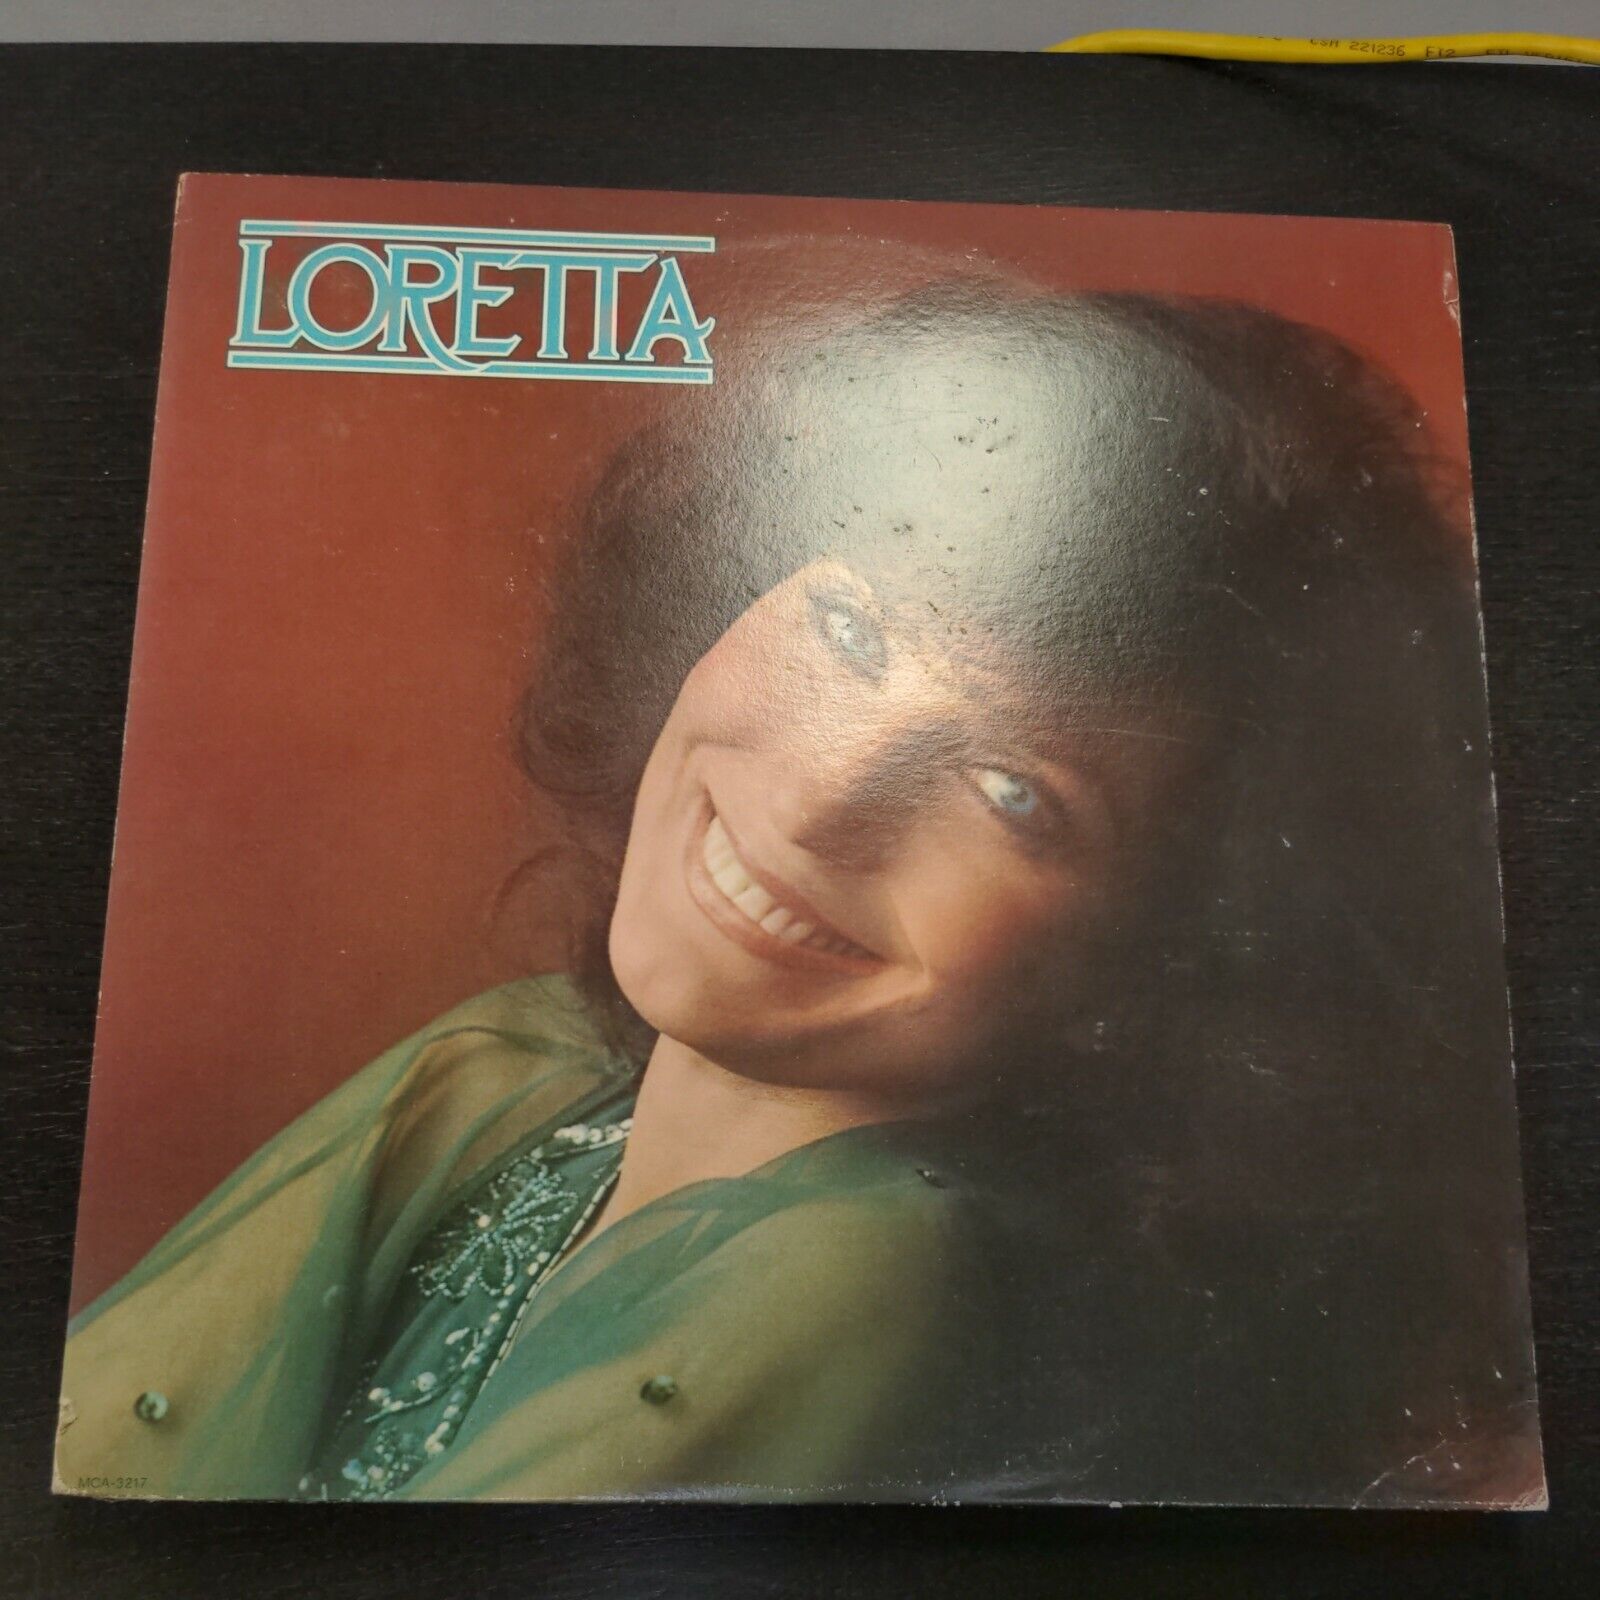 Record Album Loretta Lynn - Loretta LP VG